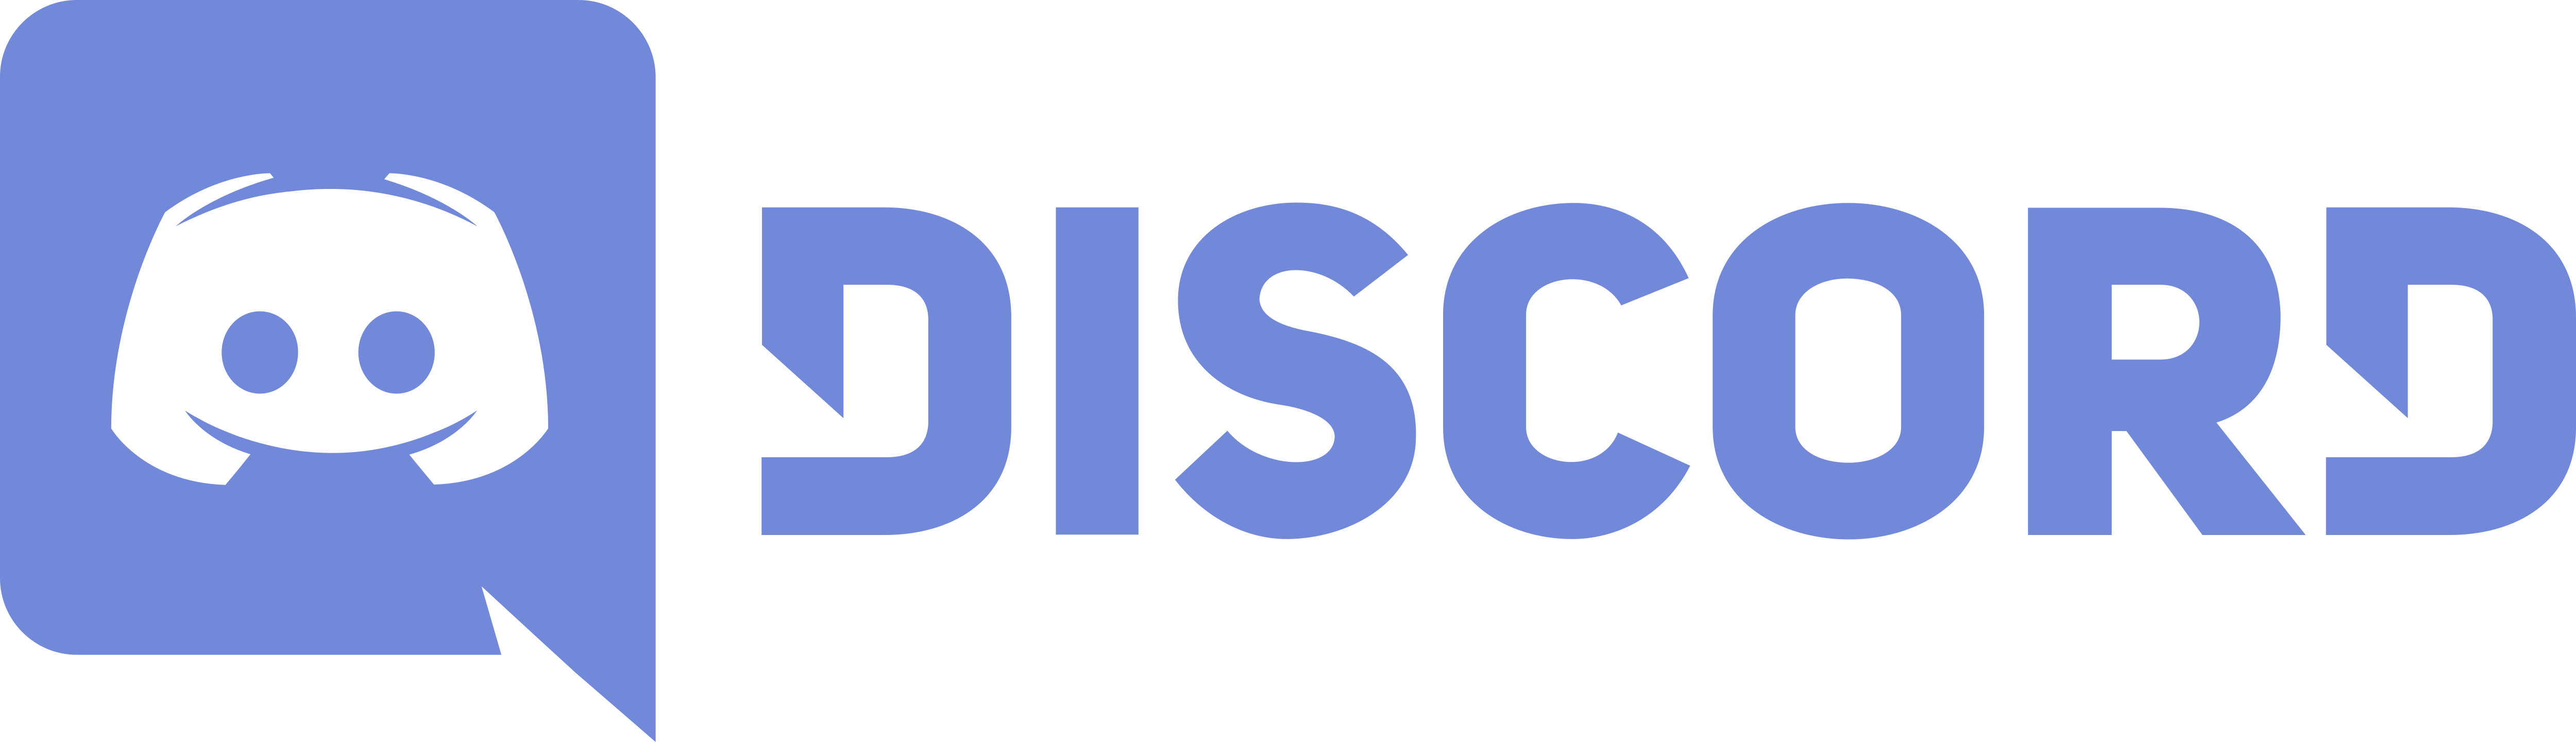 Discord_logo_PNG3.png